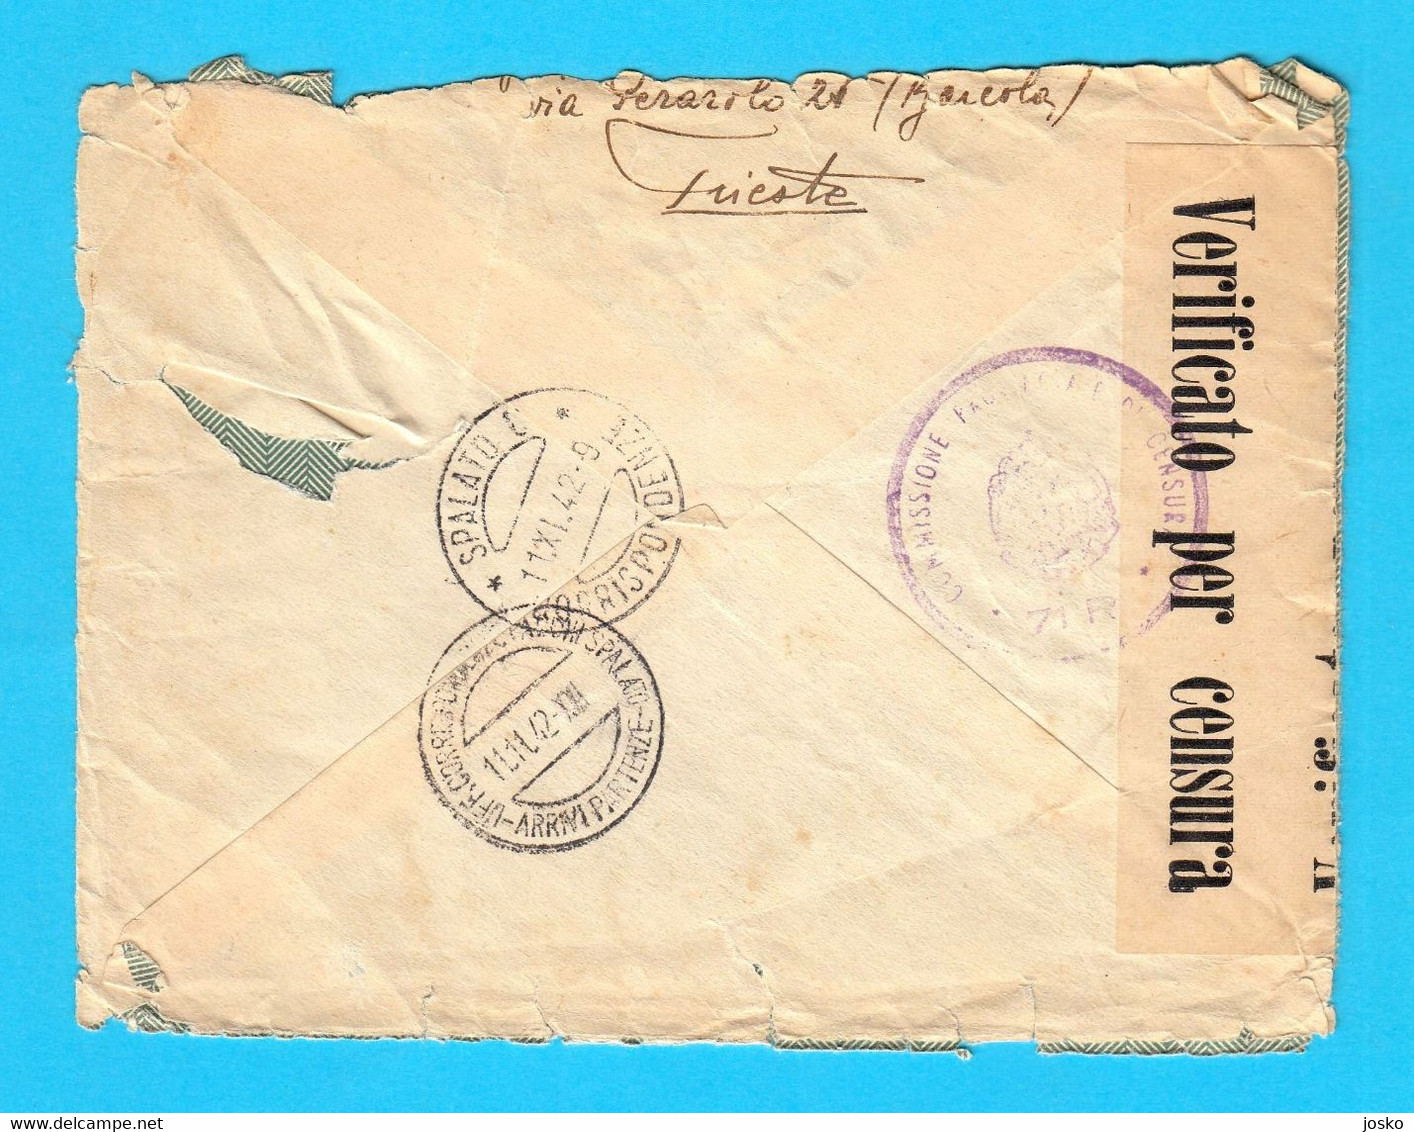 WW2 ... TRIESTE - BARCOLA - Registered Letter (Posta Raccomandata) 1942 Travelled To Spalato - Dalmazia CENSURA CENSURE - Kroatische Bes.: Sebenico & Spalato